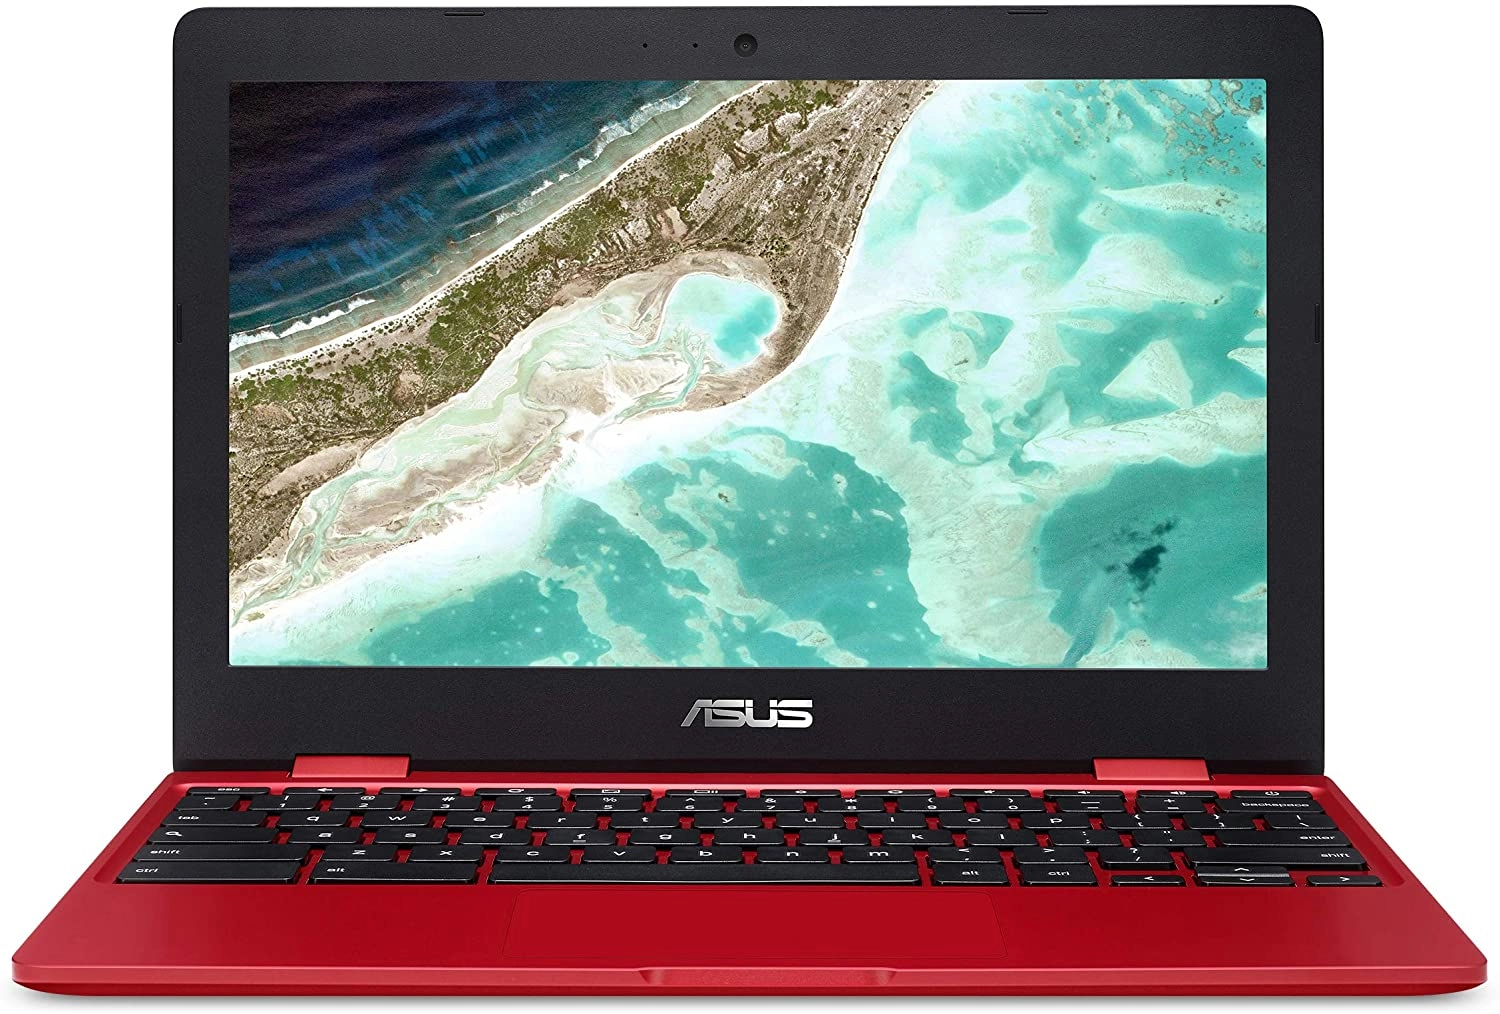 Asus Chromebook 12 laptop image